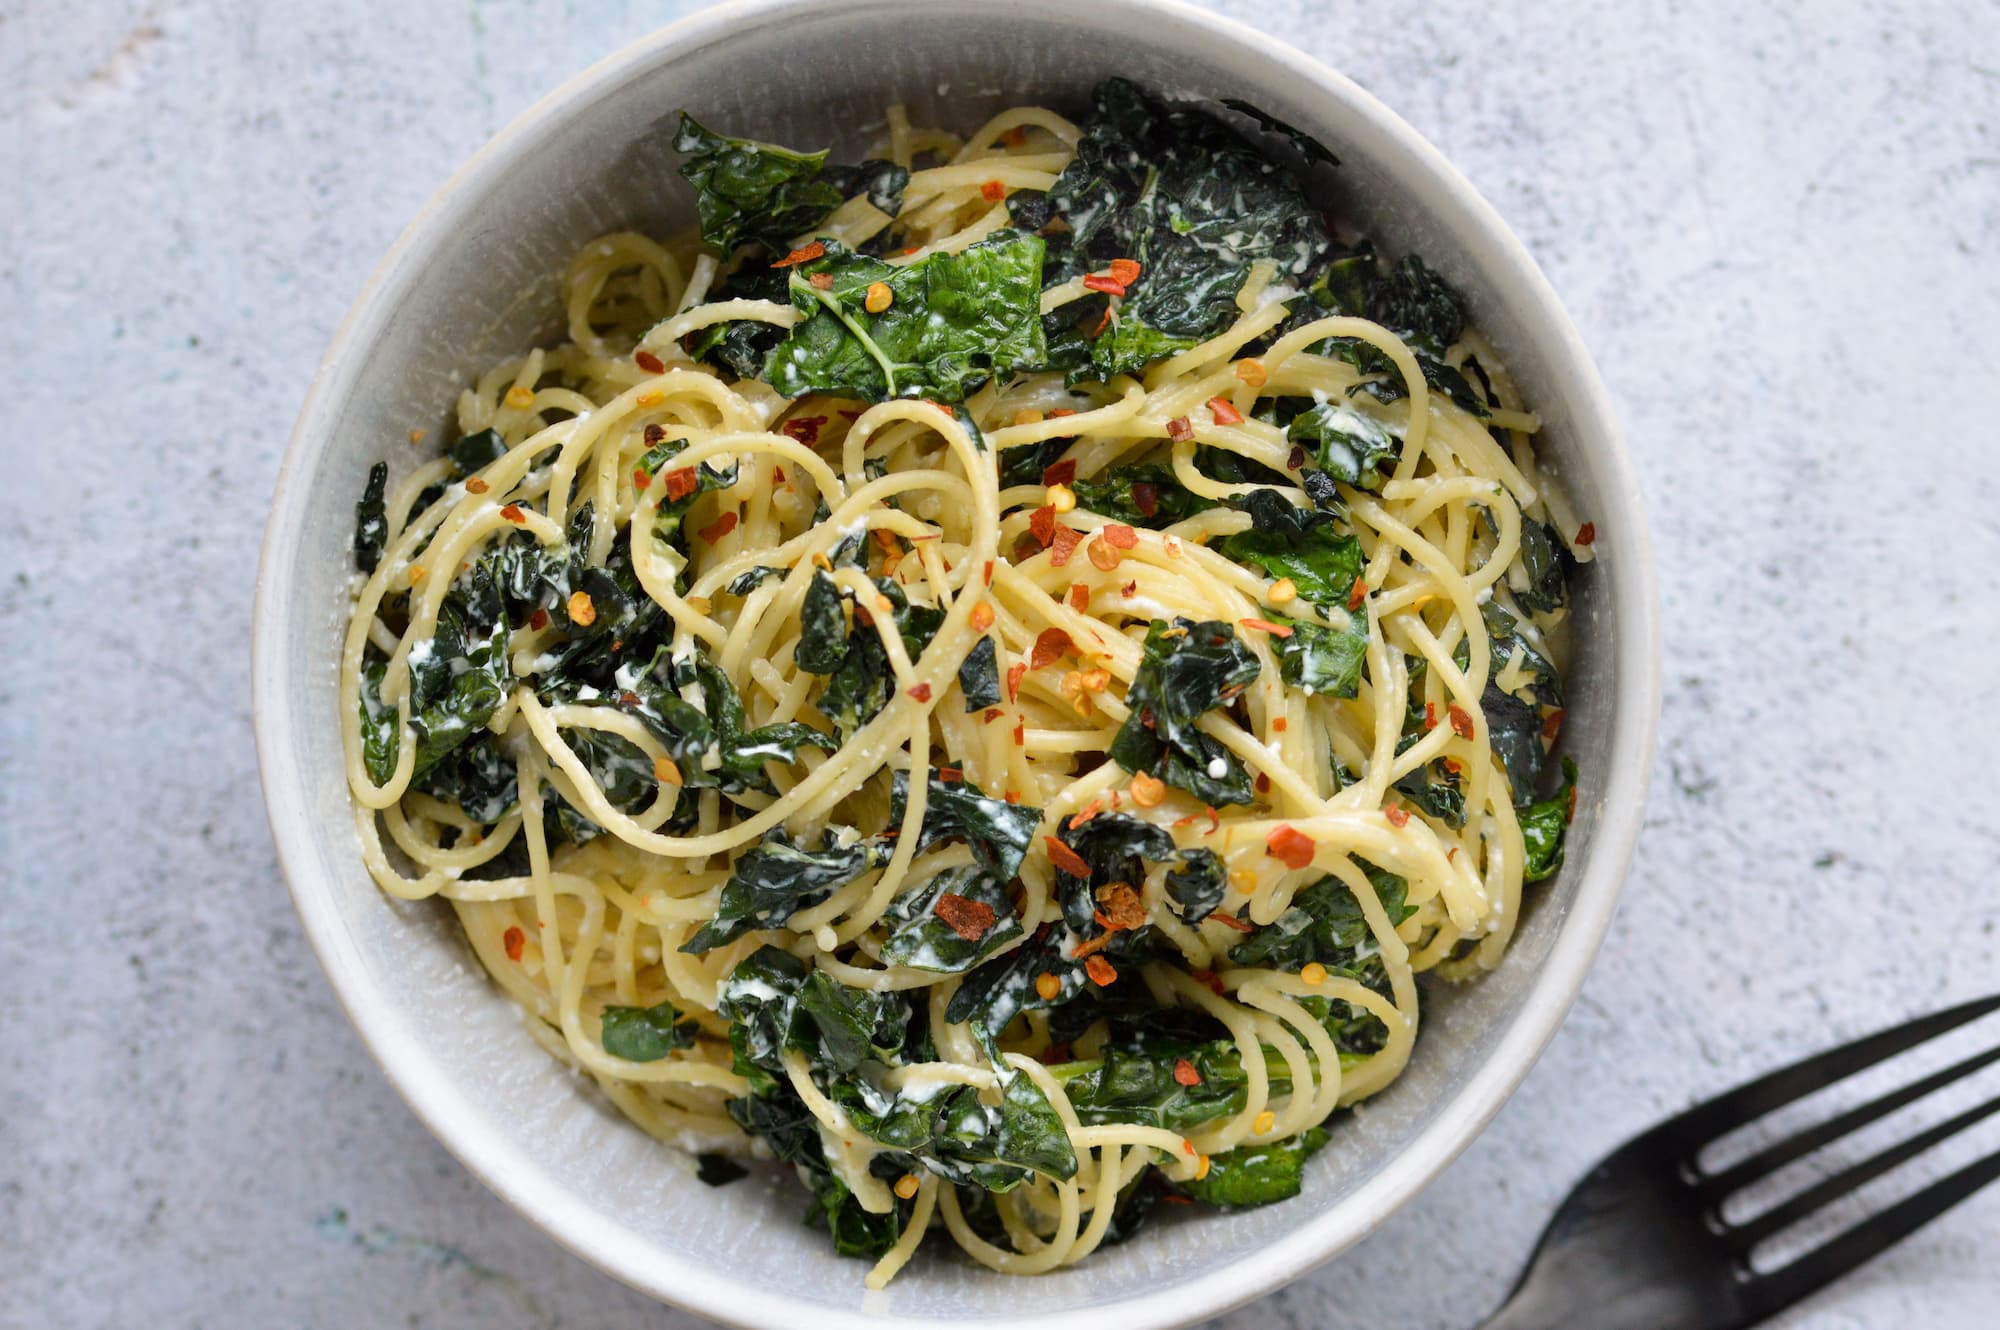 https://greenletes.com/wp-content/uploads/2020/05/Pasta-with-Garlicky-Kale-Ricotta.jpg